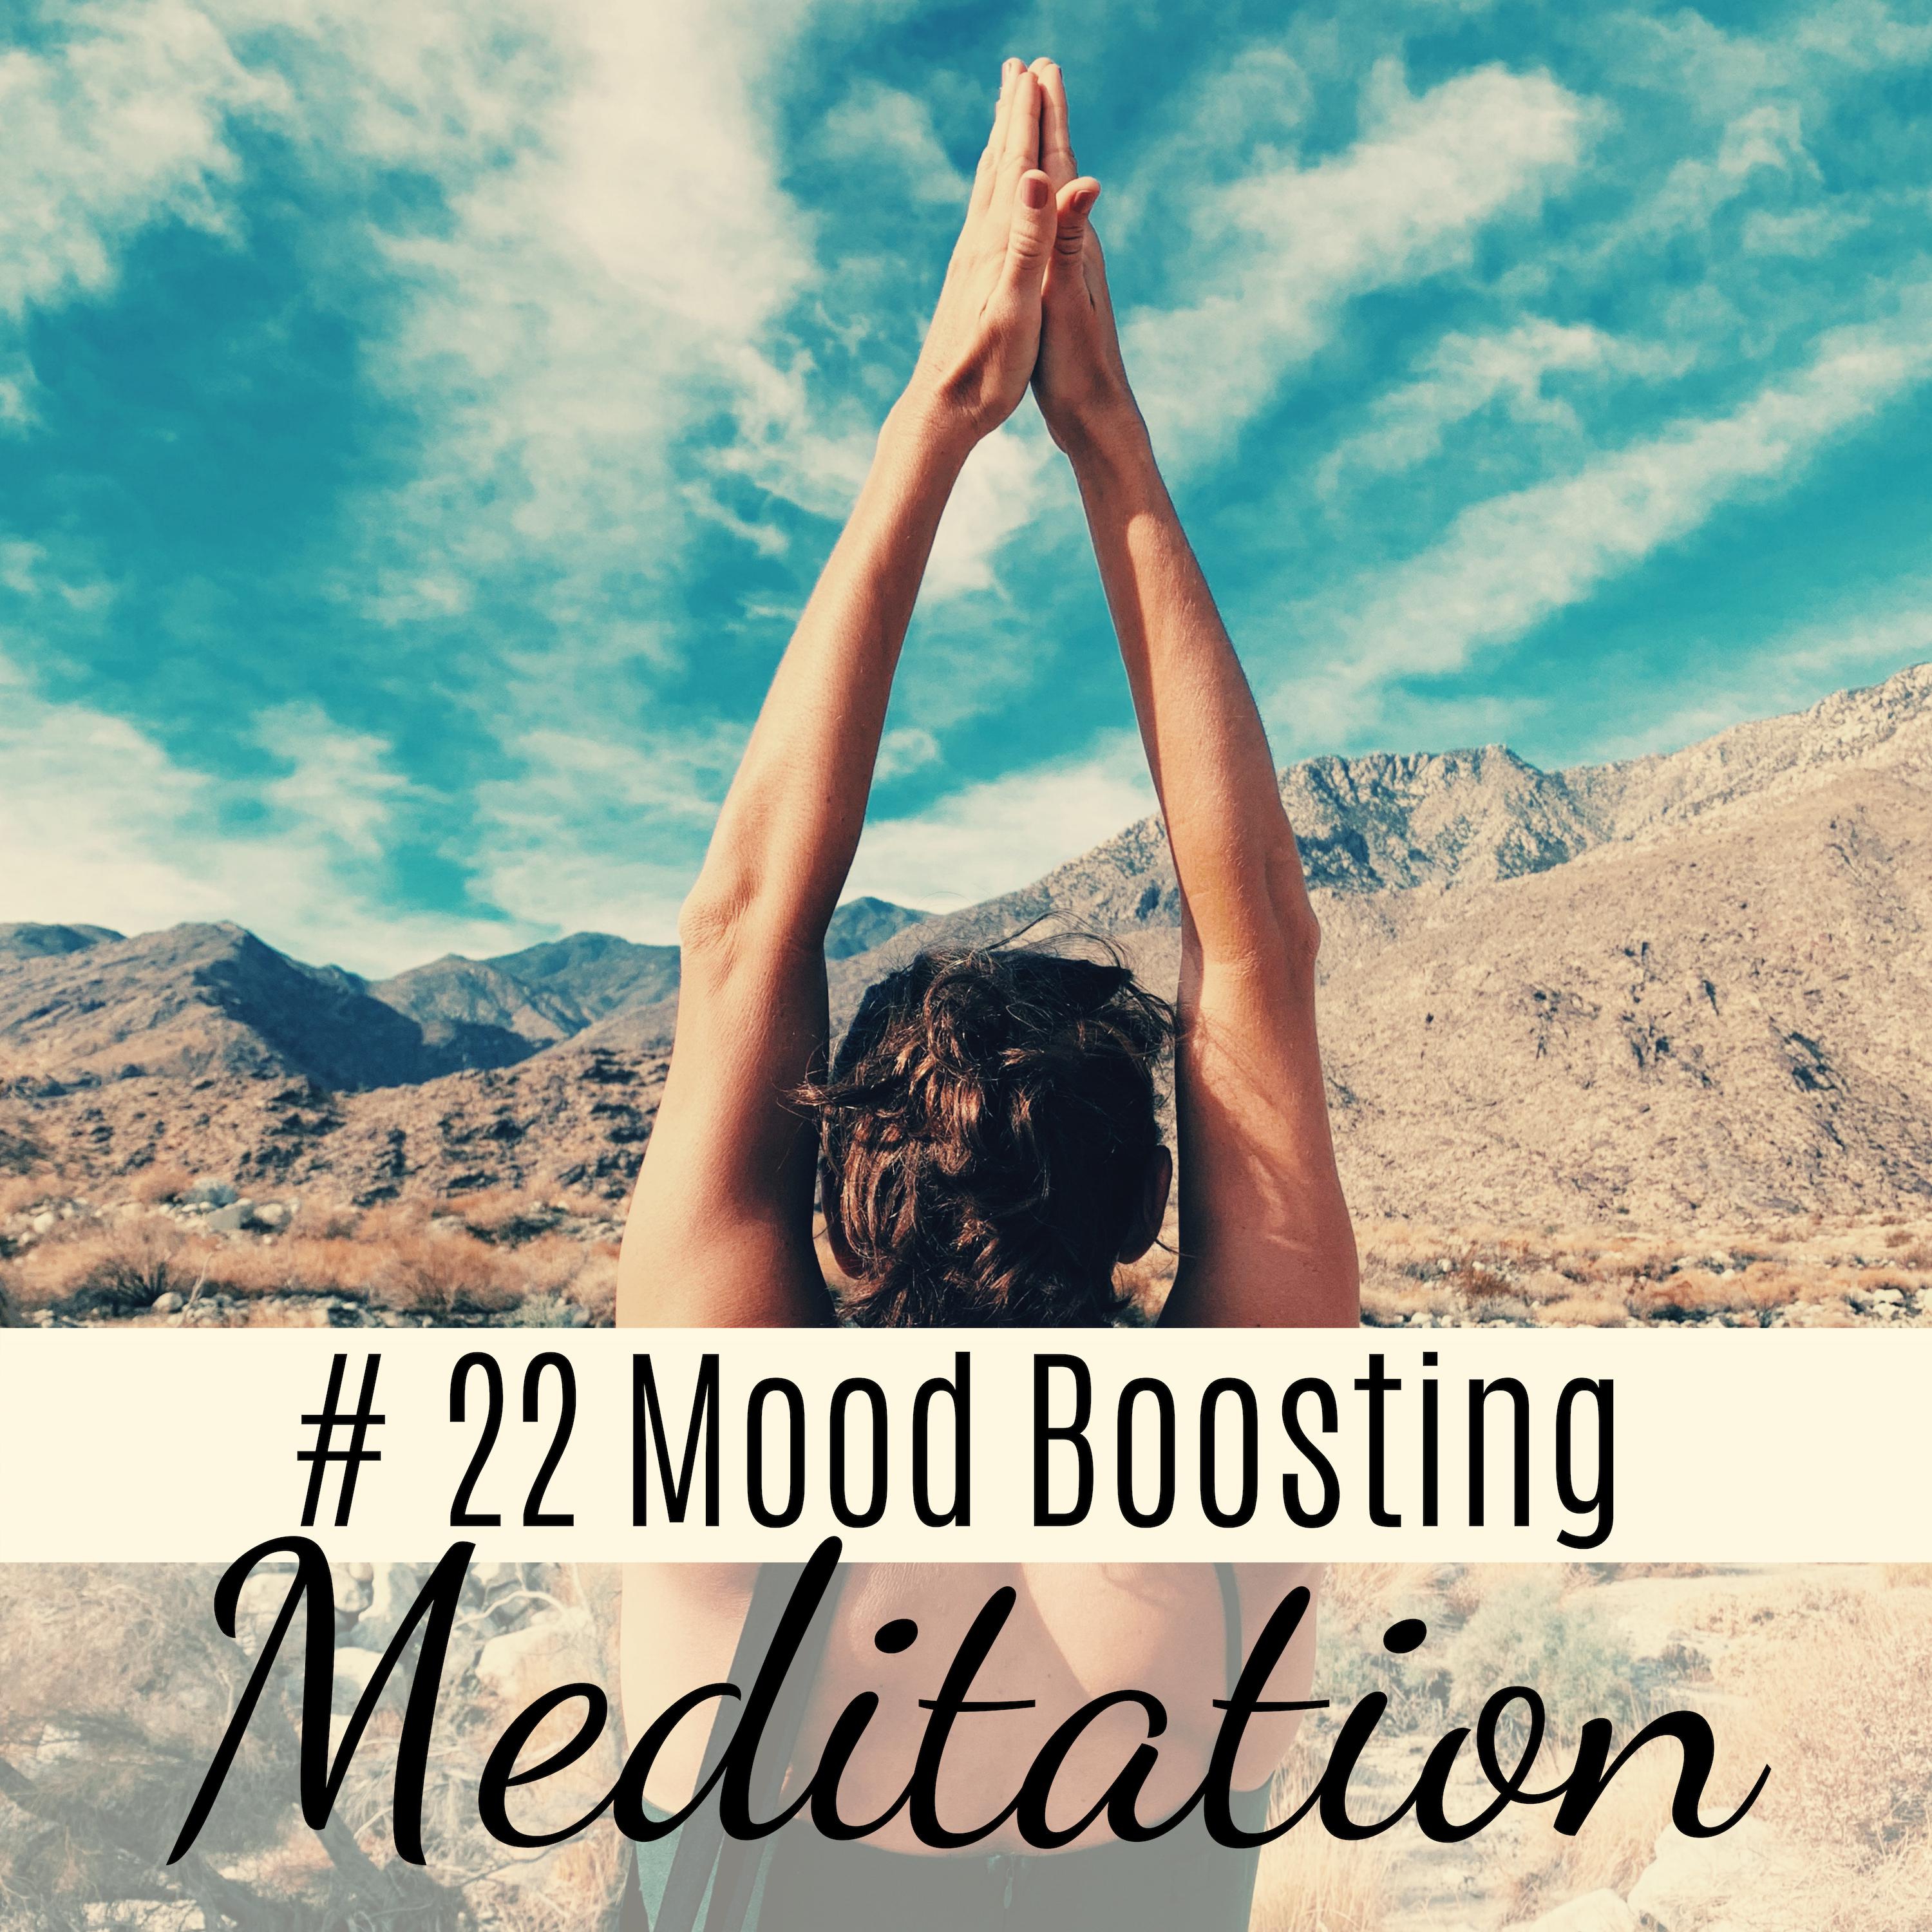 # 22 Mood Boosting Meditation - Vital Energy Music, Namaste Stress Relief